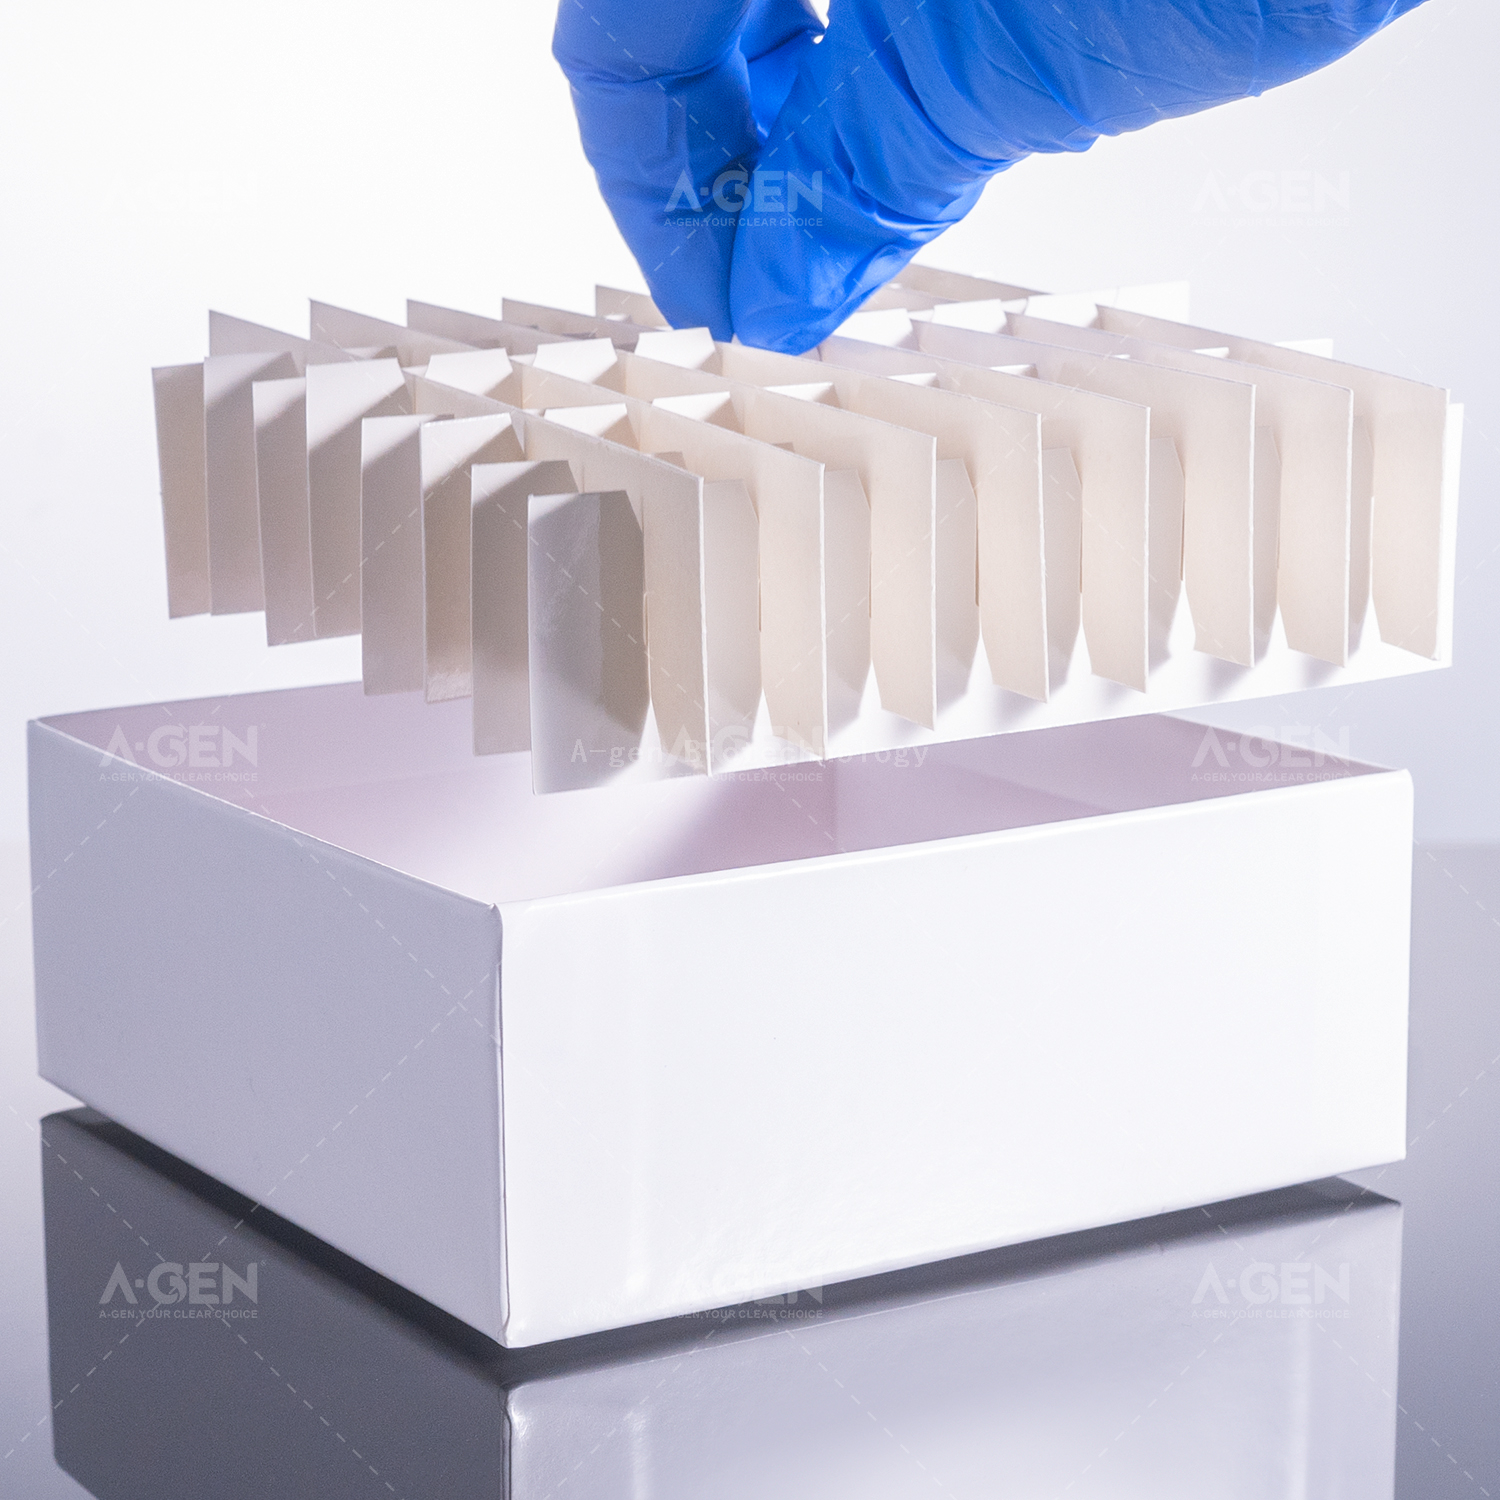 100 Wells Cryo Cardboard Freezer Box Adaptable 0.5mL Cryogenic Vial